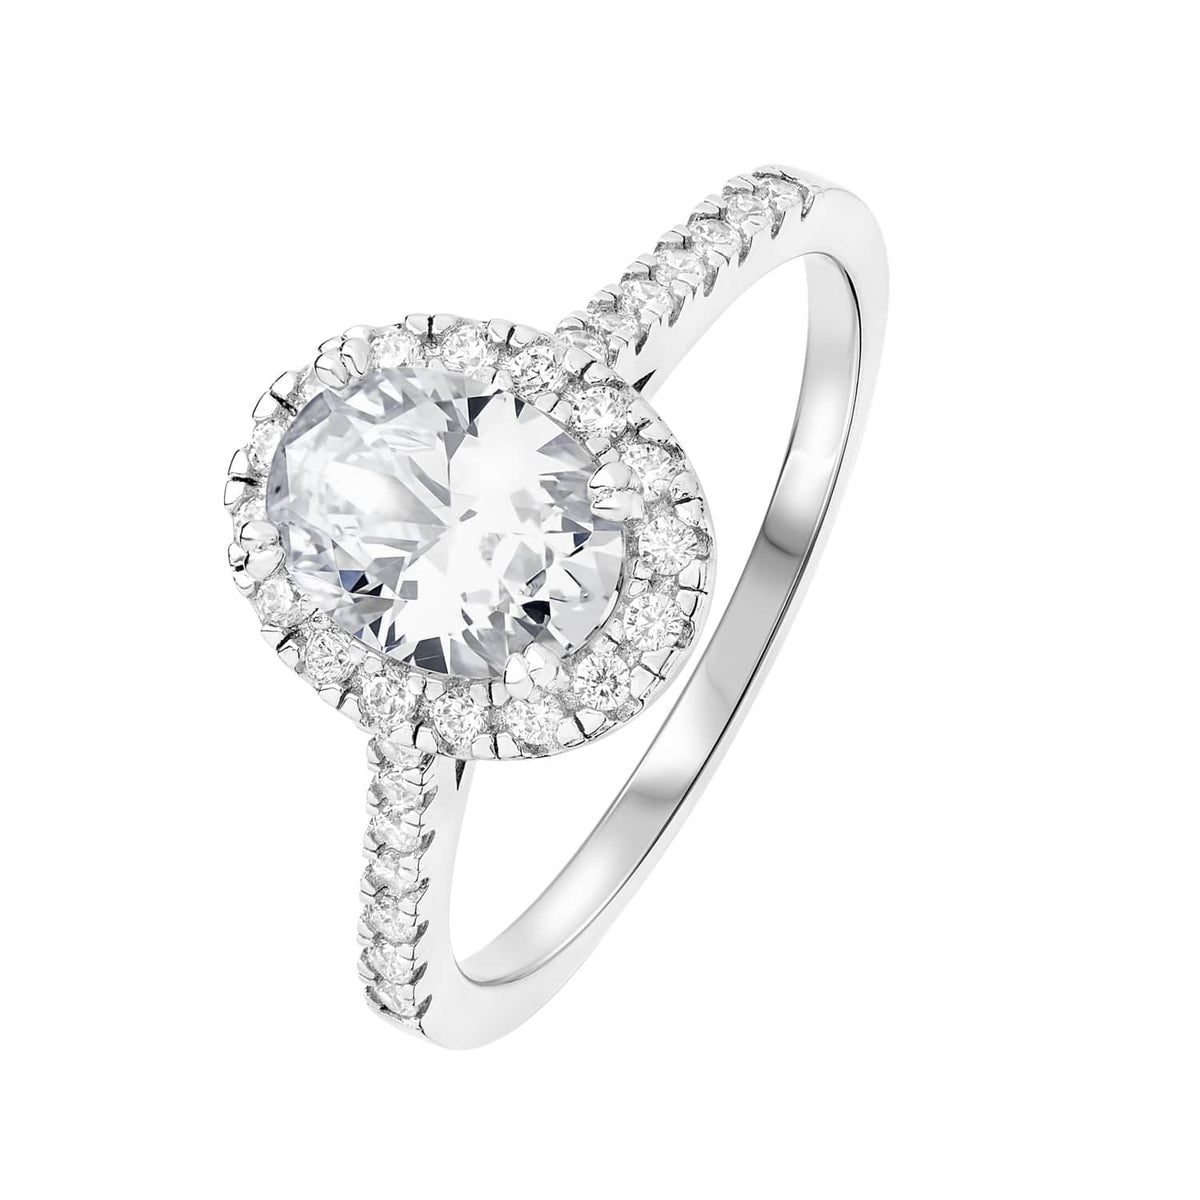 Oval halo diamond ring